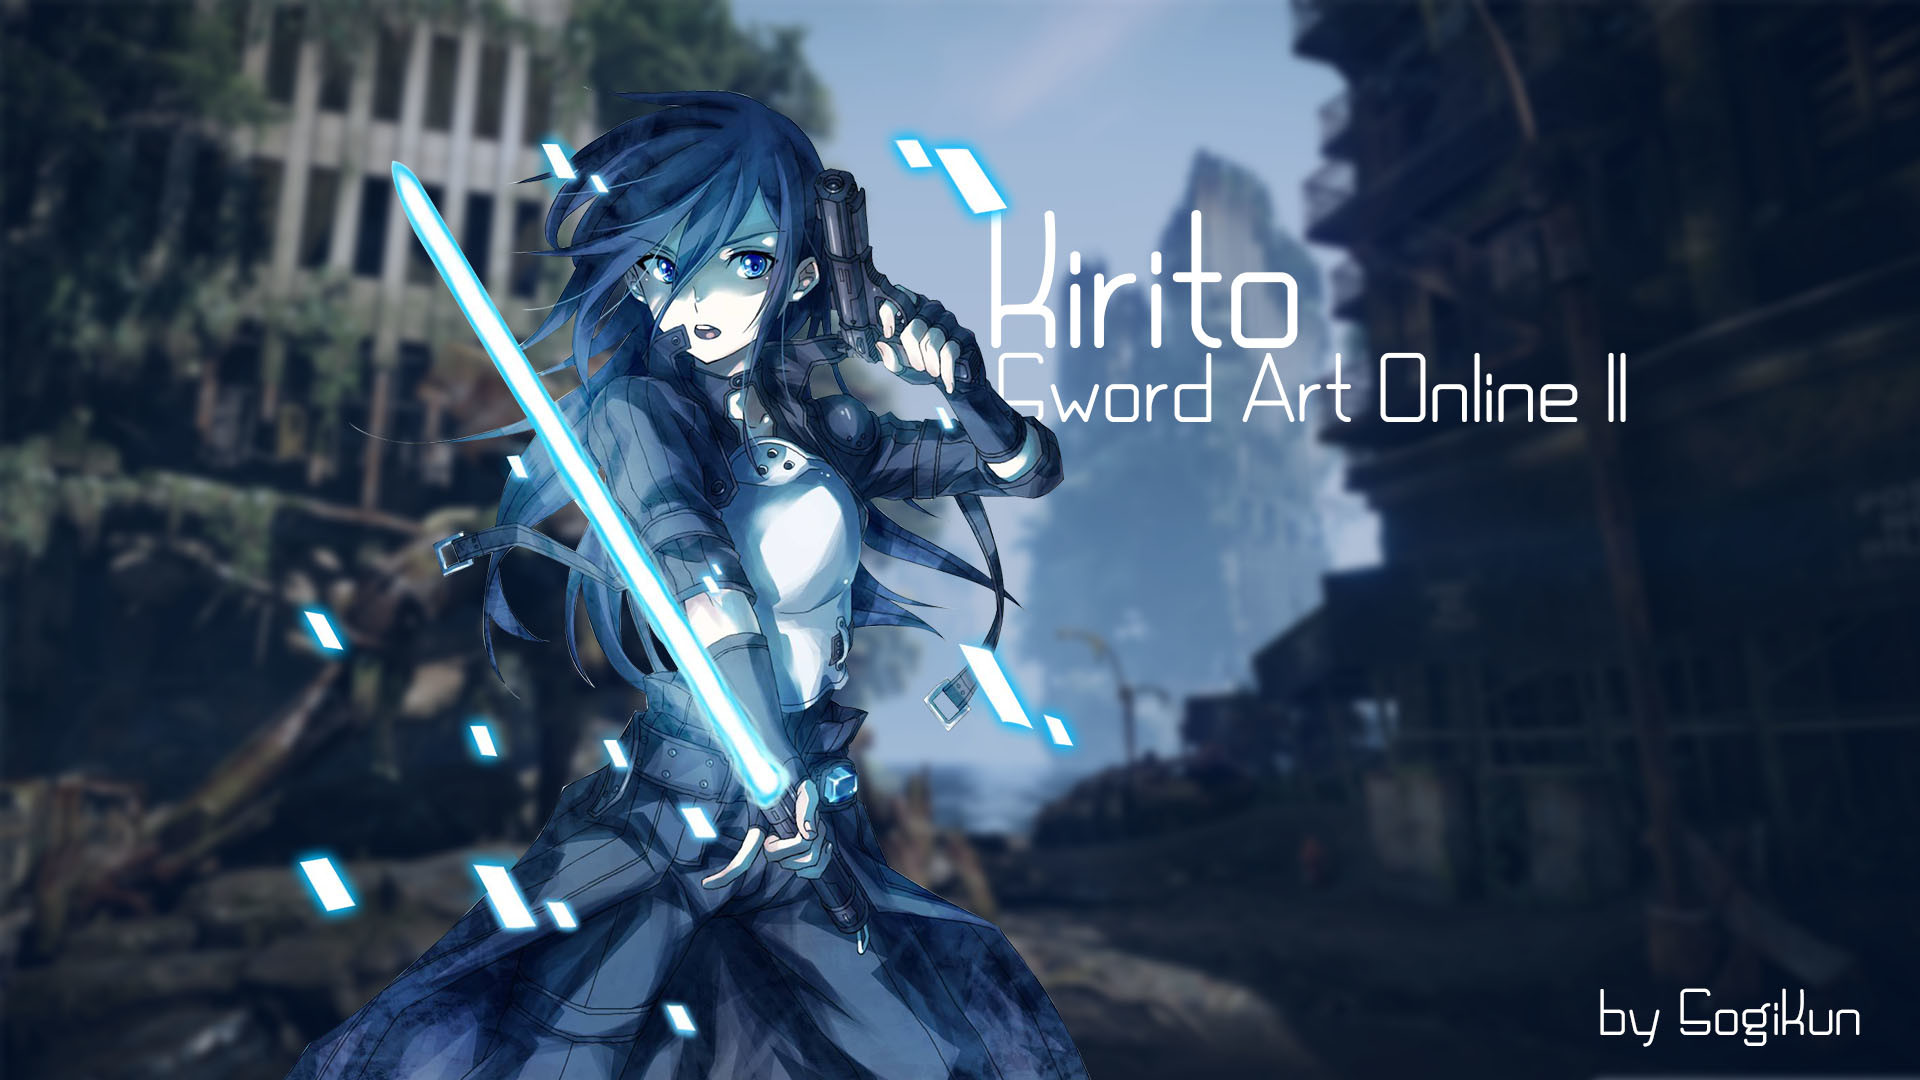 Sword Art Online II – Kirito Wallpaper by SogiKun